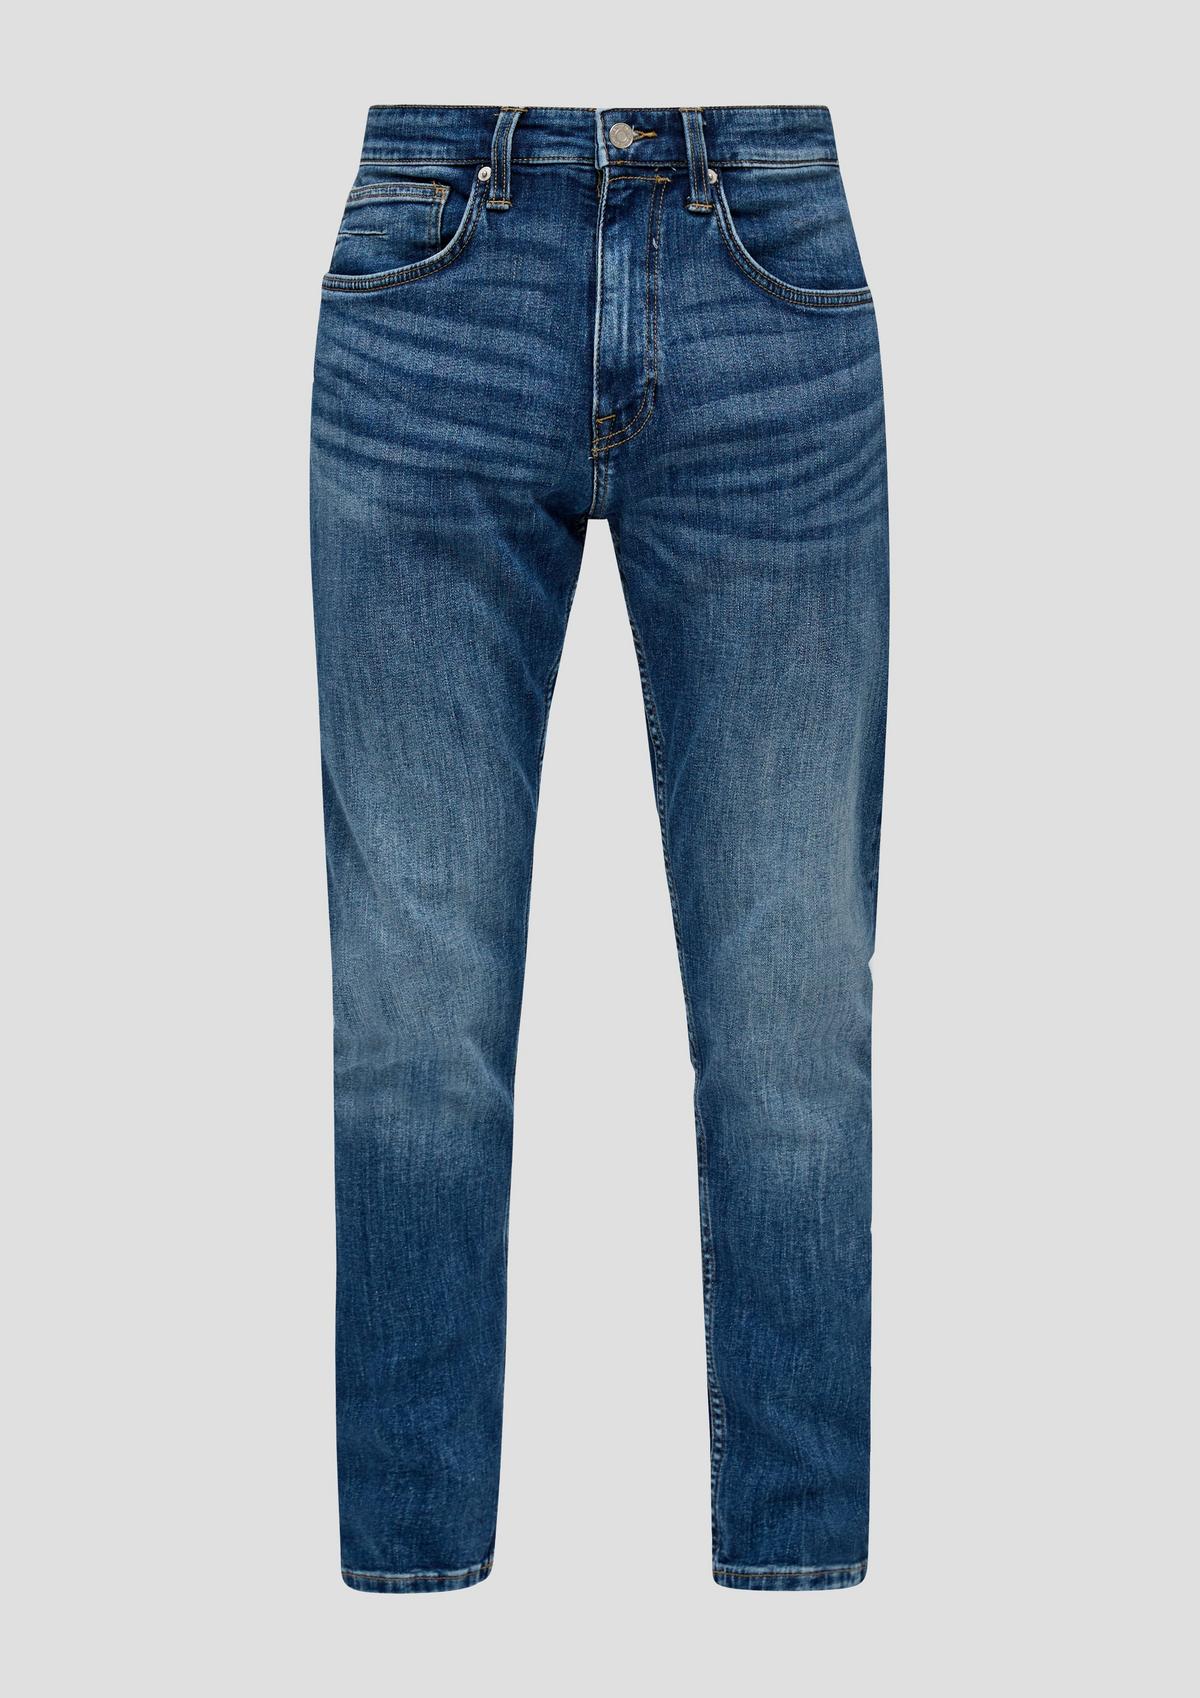 s.Oliver Jeans / regular fit / high rise / tapered leg